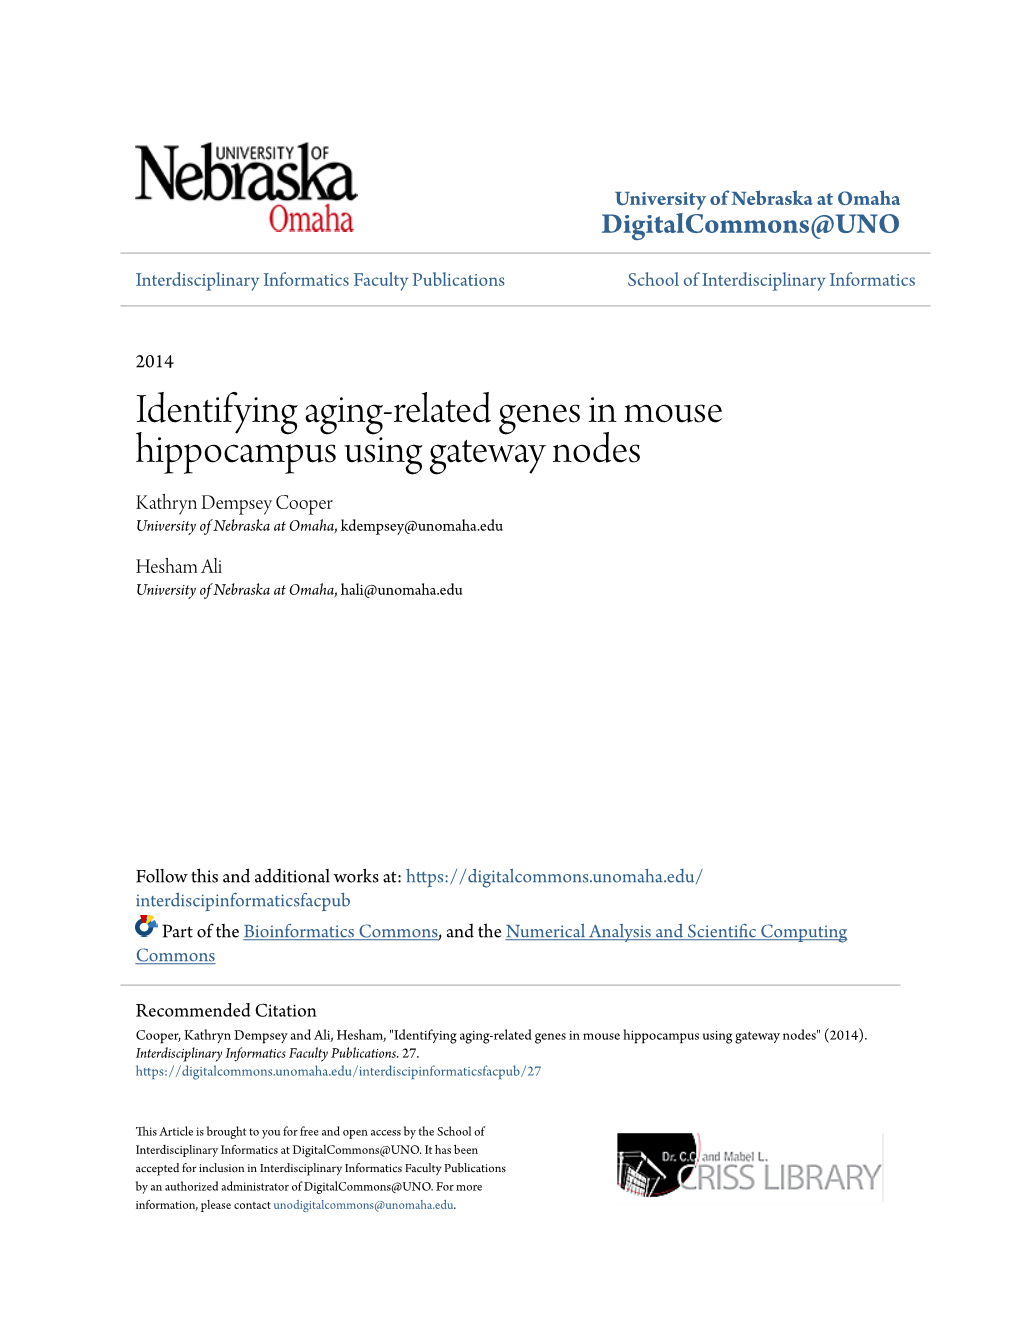 Identifying Aging-Related Genes in Mouse Hippocampus Using Gateway Nodes Kathryn Dempsey Cooper University of Nebraska at Omaha, Kdempsey@Unomaha.Edu